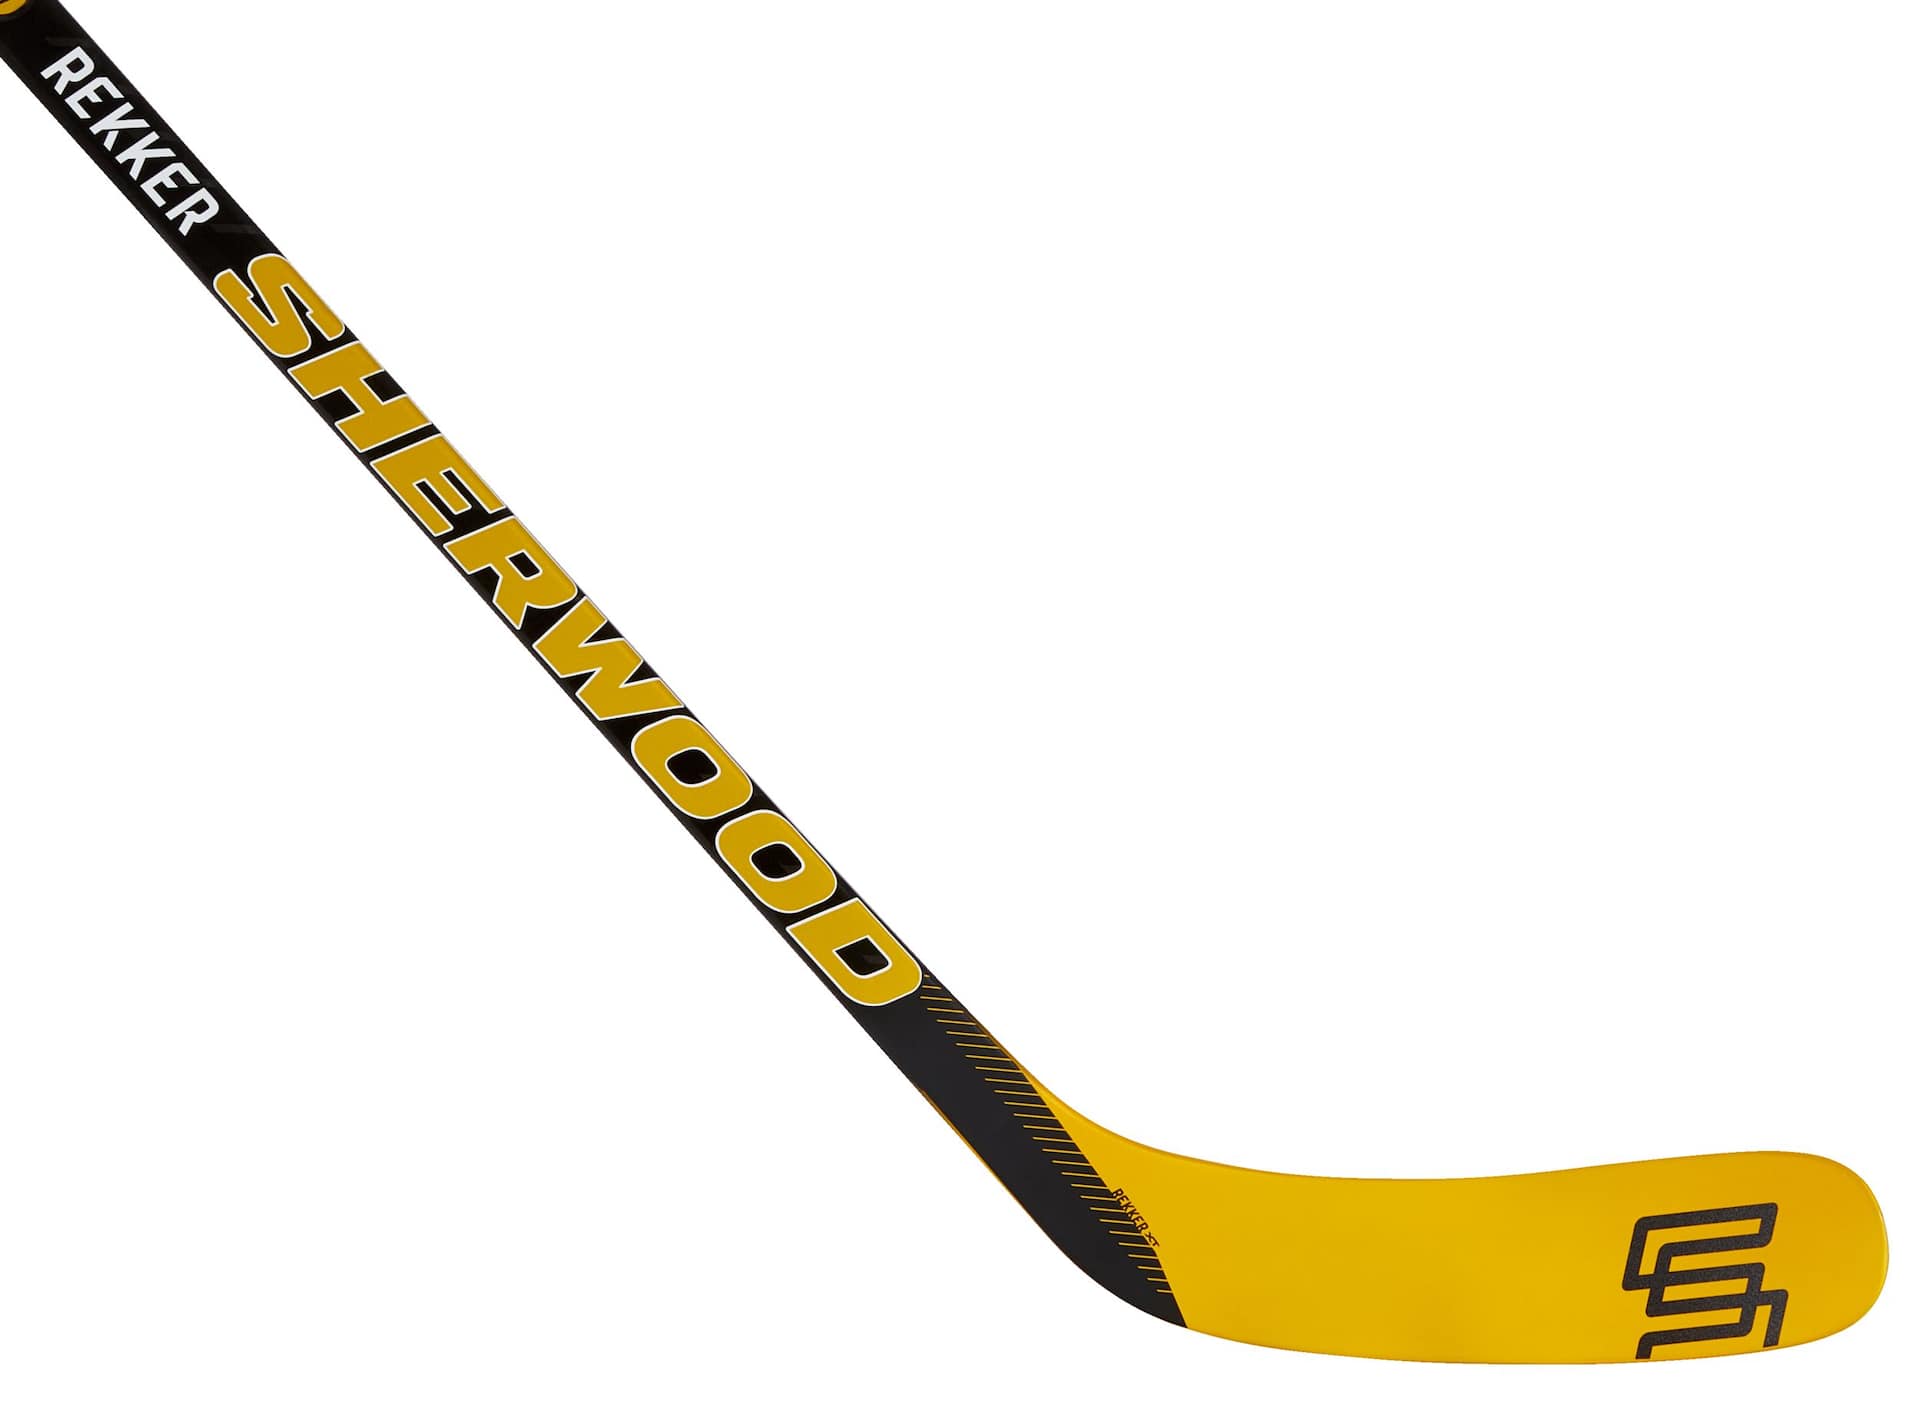 Sherwood 6087 Wood Hockey Stick, Junior, 55 Flex